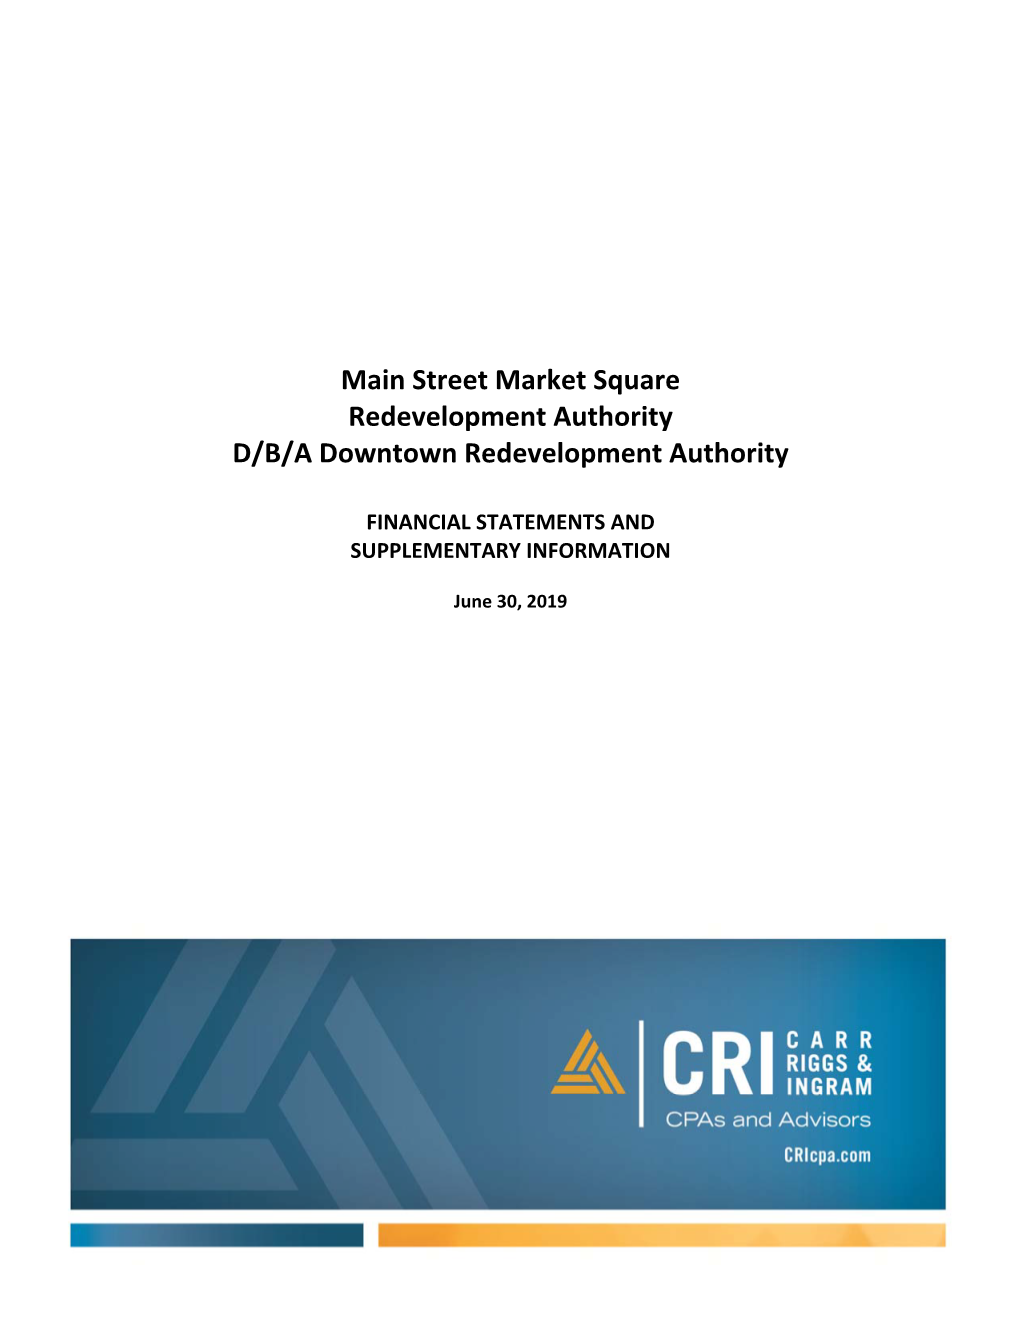 Main Street Market Square Redevelopment Authority D/B/A Downtown Redevelopment Authority